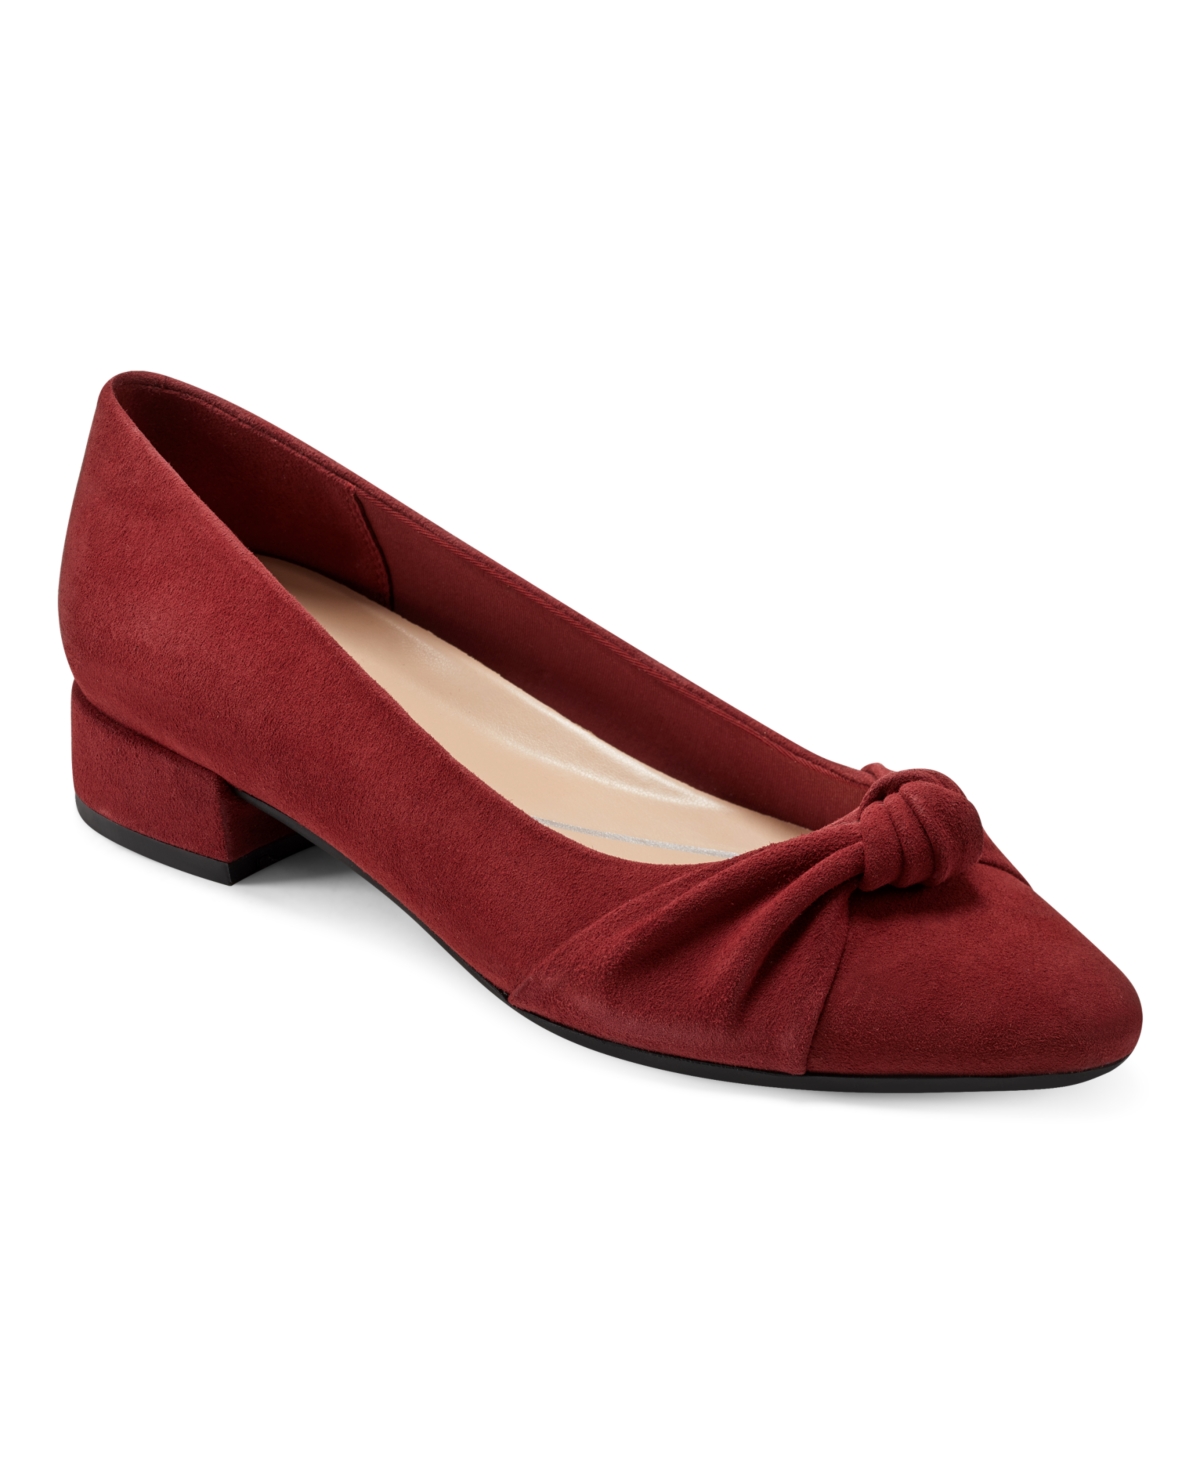 Women's Eflex Caster Slip-on Block Heel Dress Pumps - Red Suede